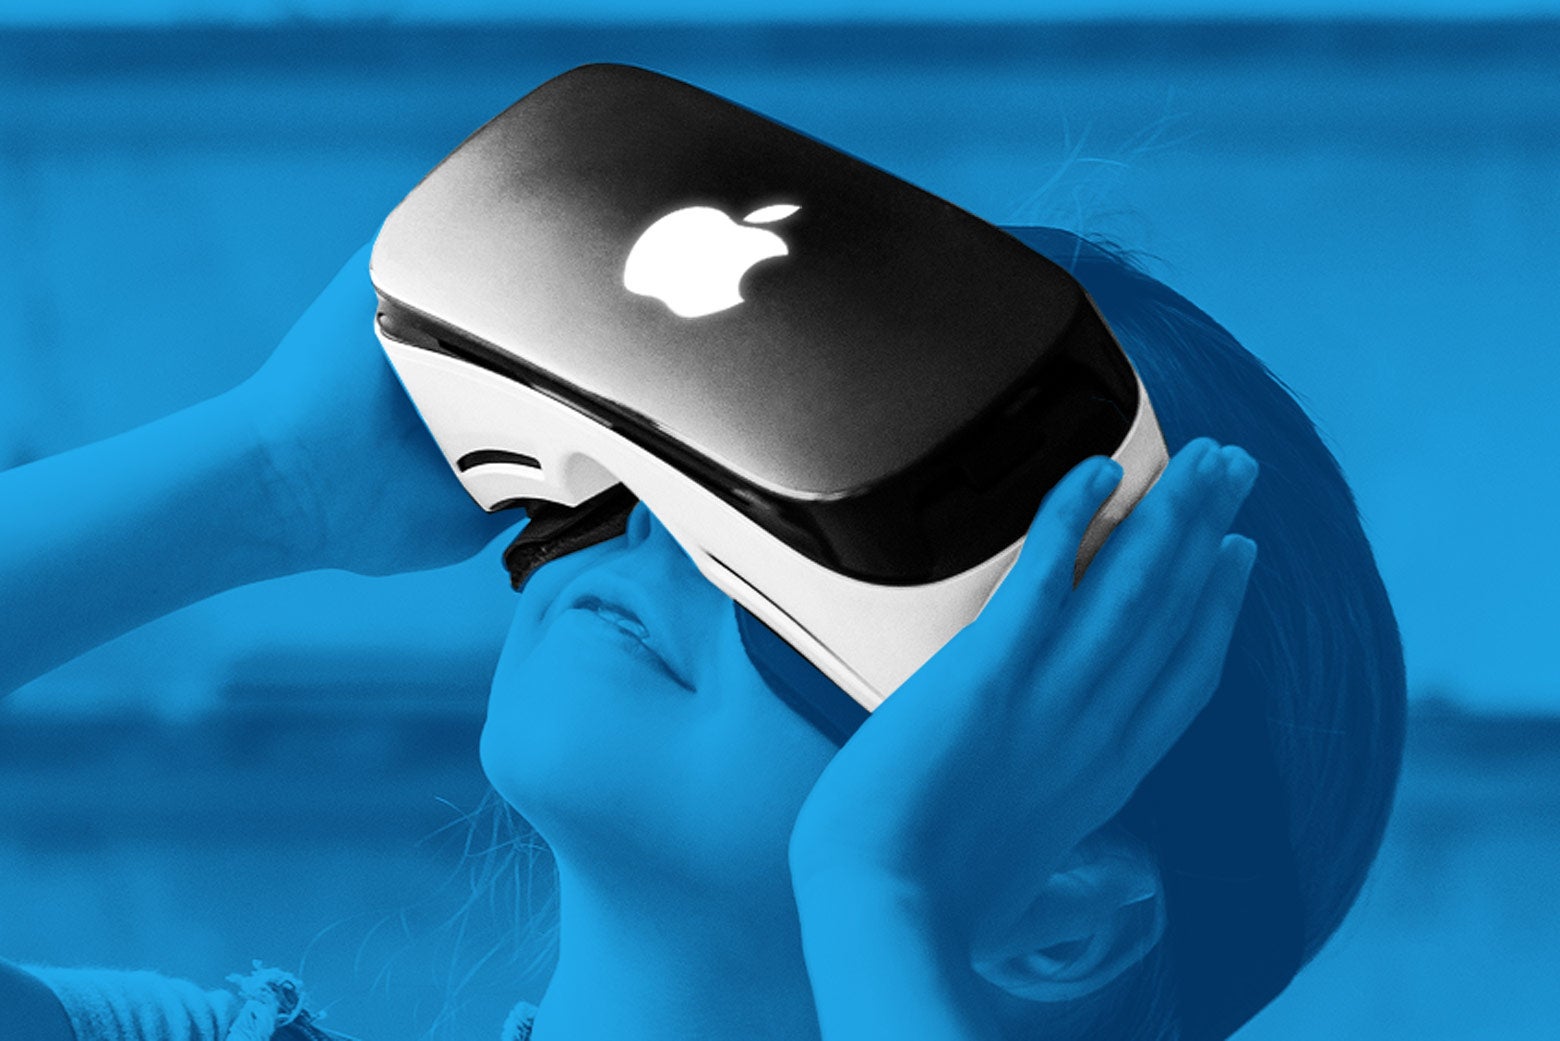 Очки виртуальной apple vision